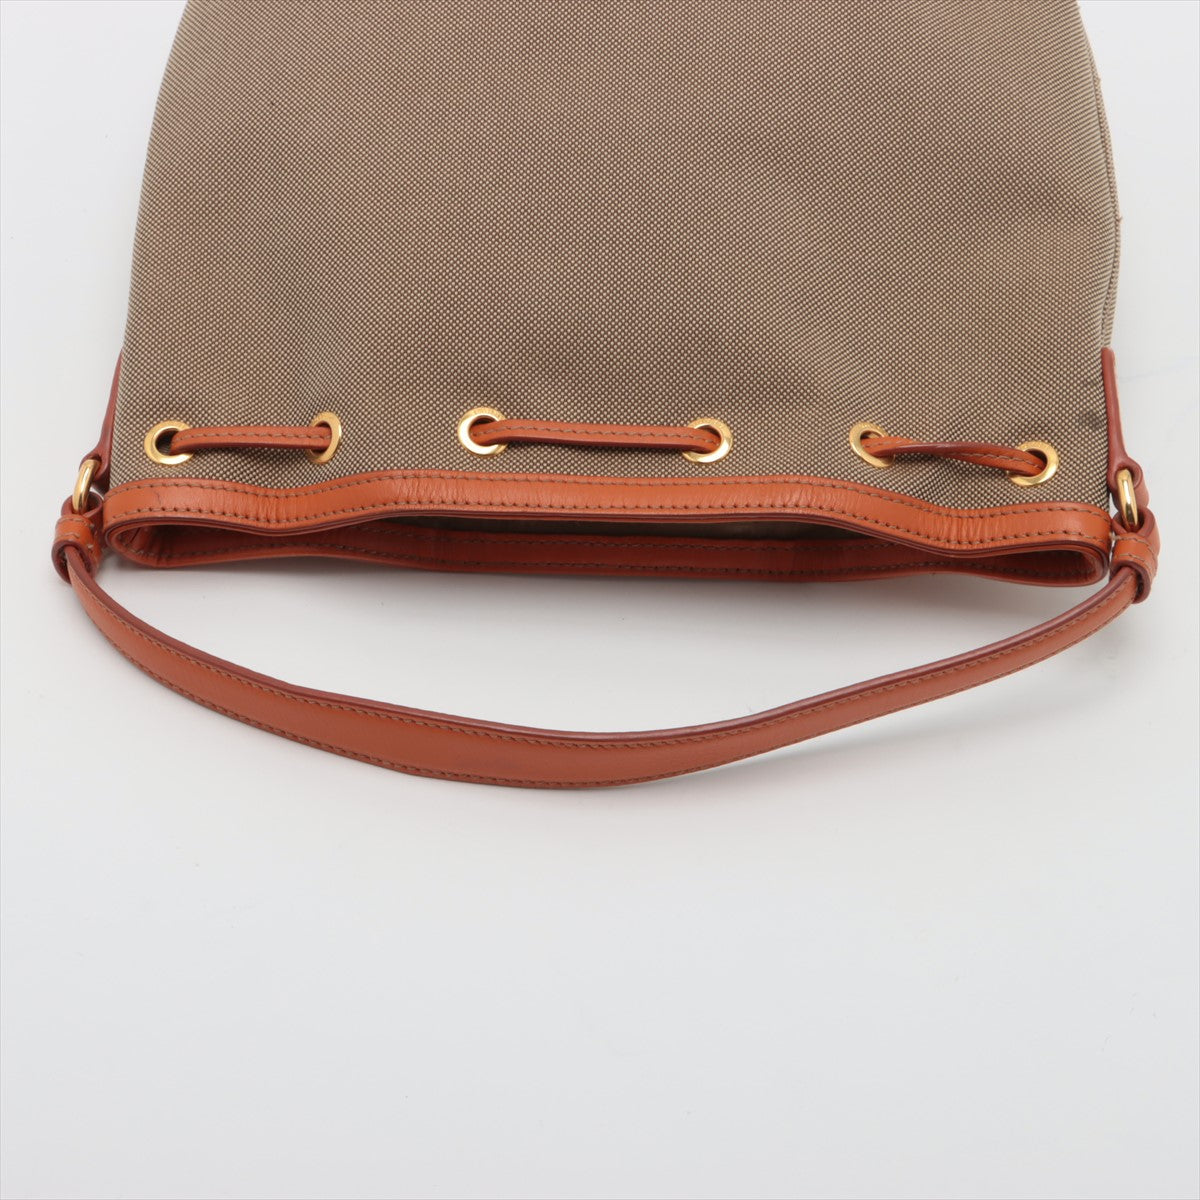 Prada Logo Jacquard Canvas & Leather 2 Way Handbag Beige x orange 1BH038